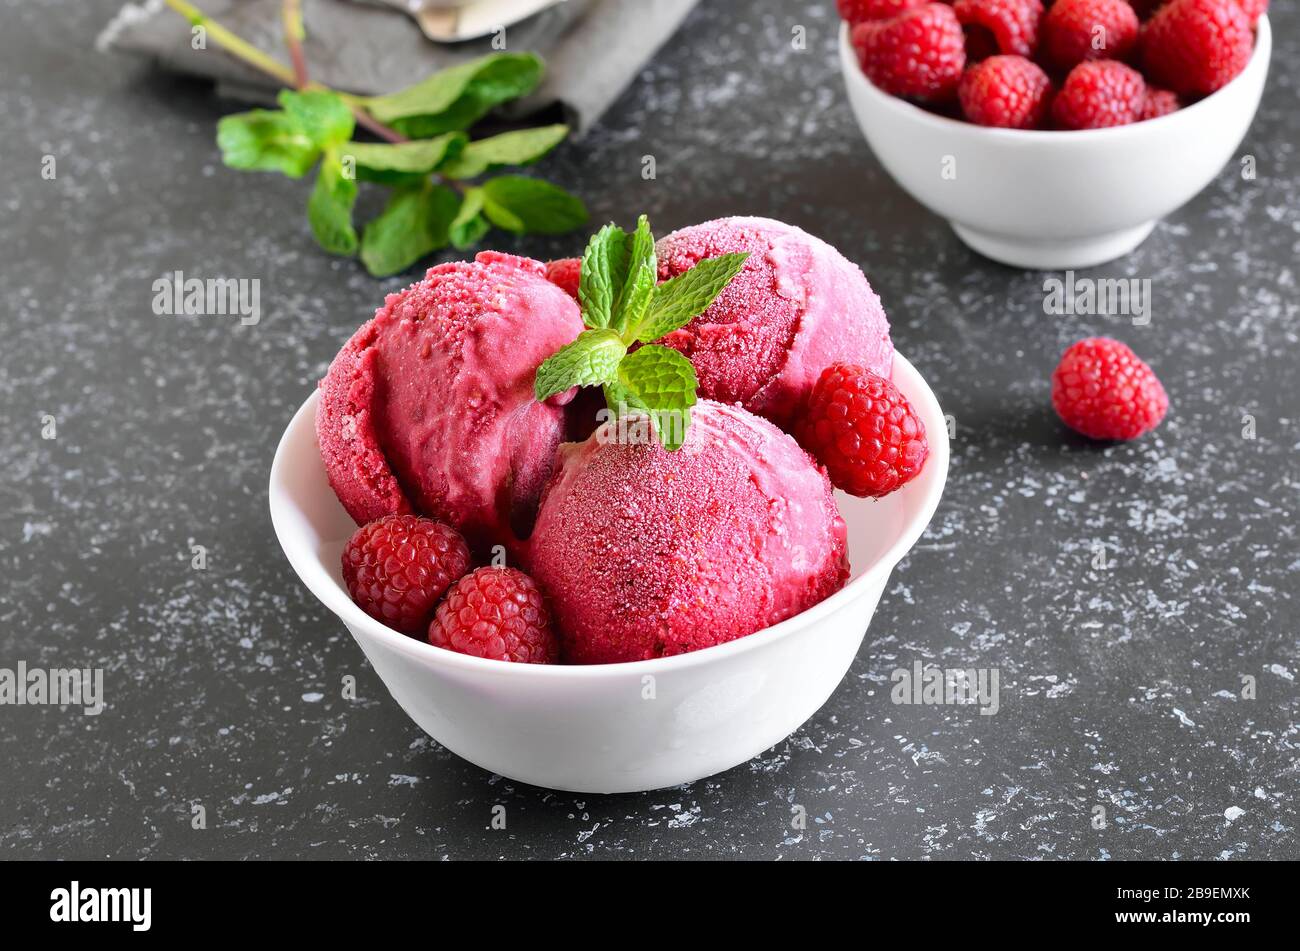 Raspberry ice cream scoop with fresh raspberries in bowl on stone background. Cold summer dessert Stock Photo